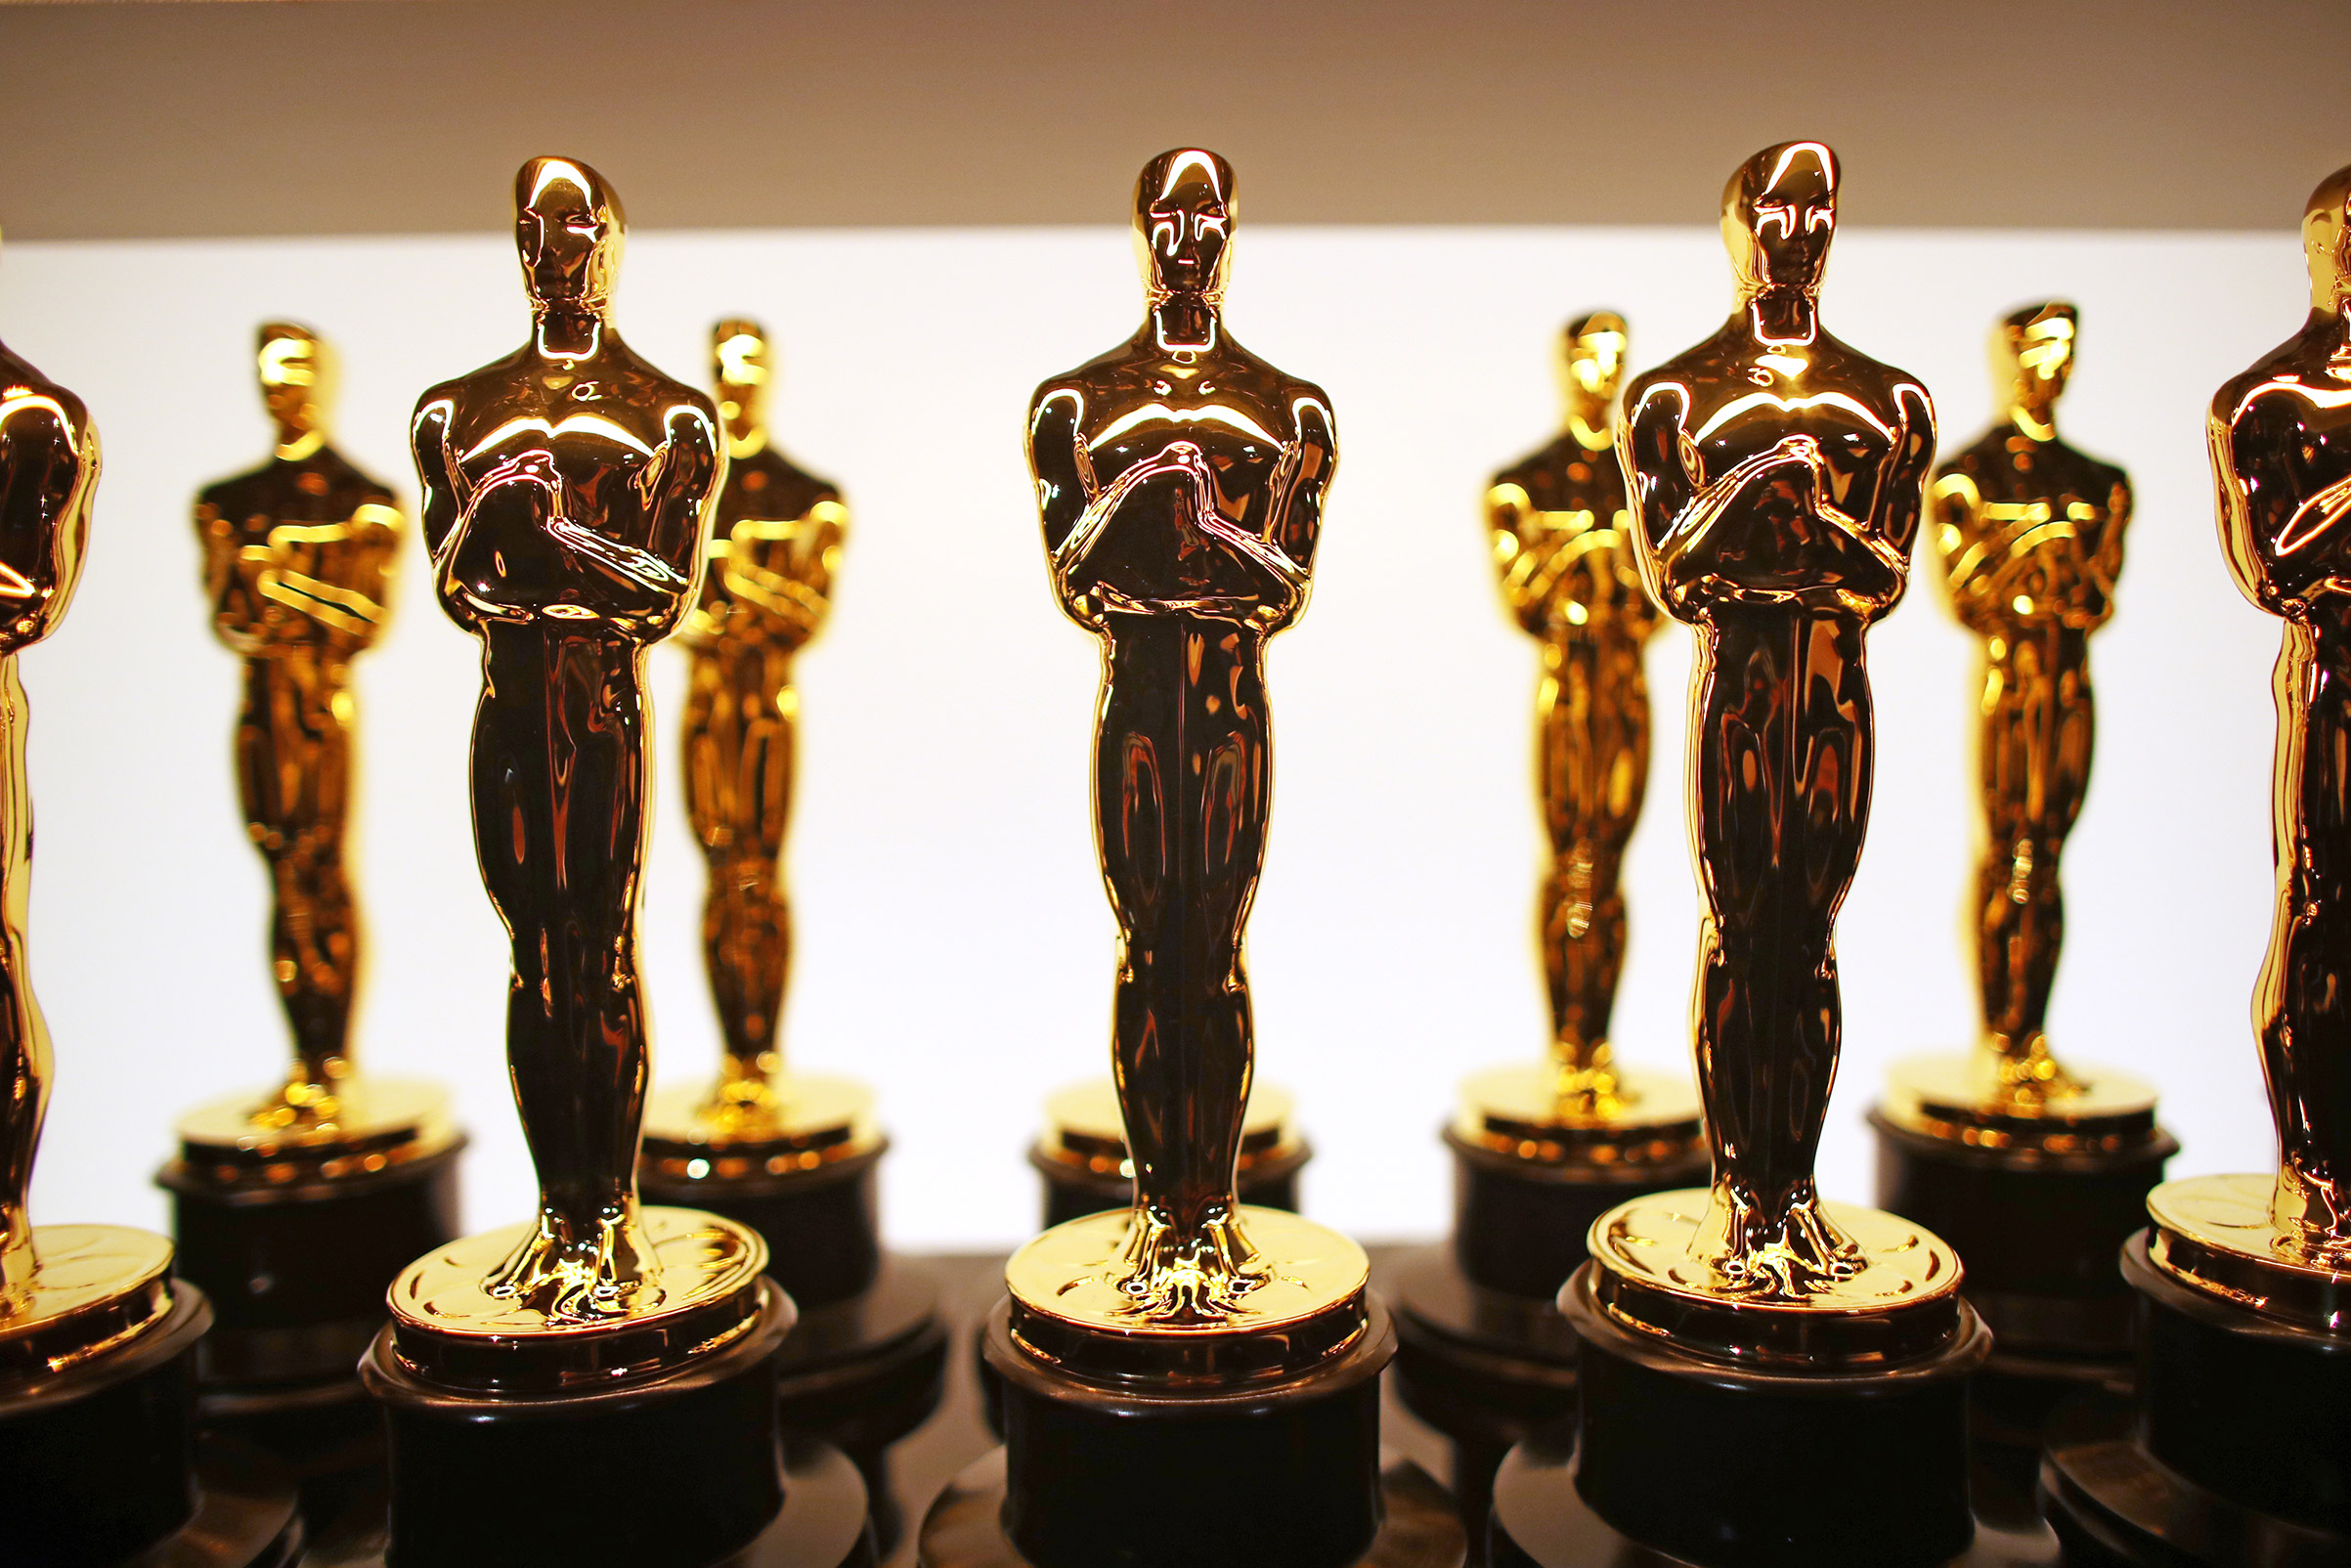 oscars-academy-awards-best-picture-category